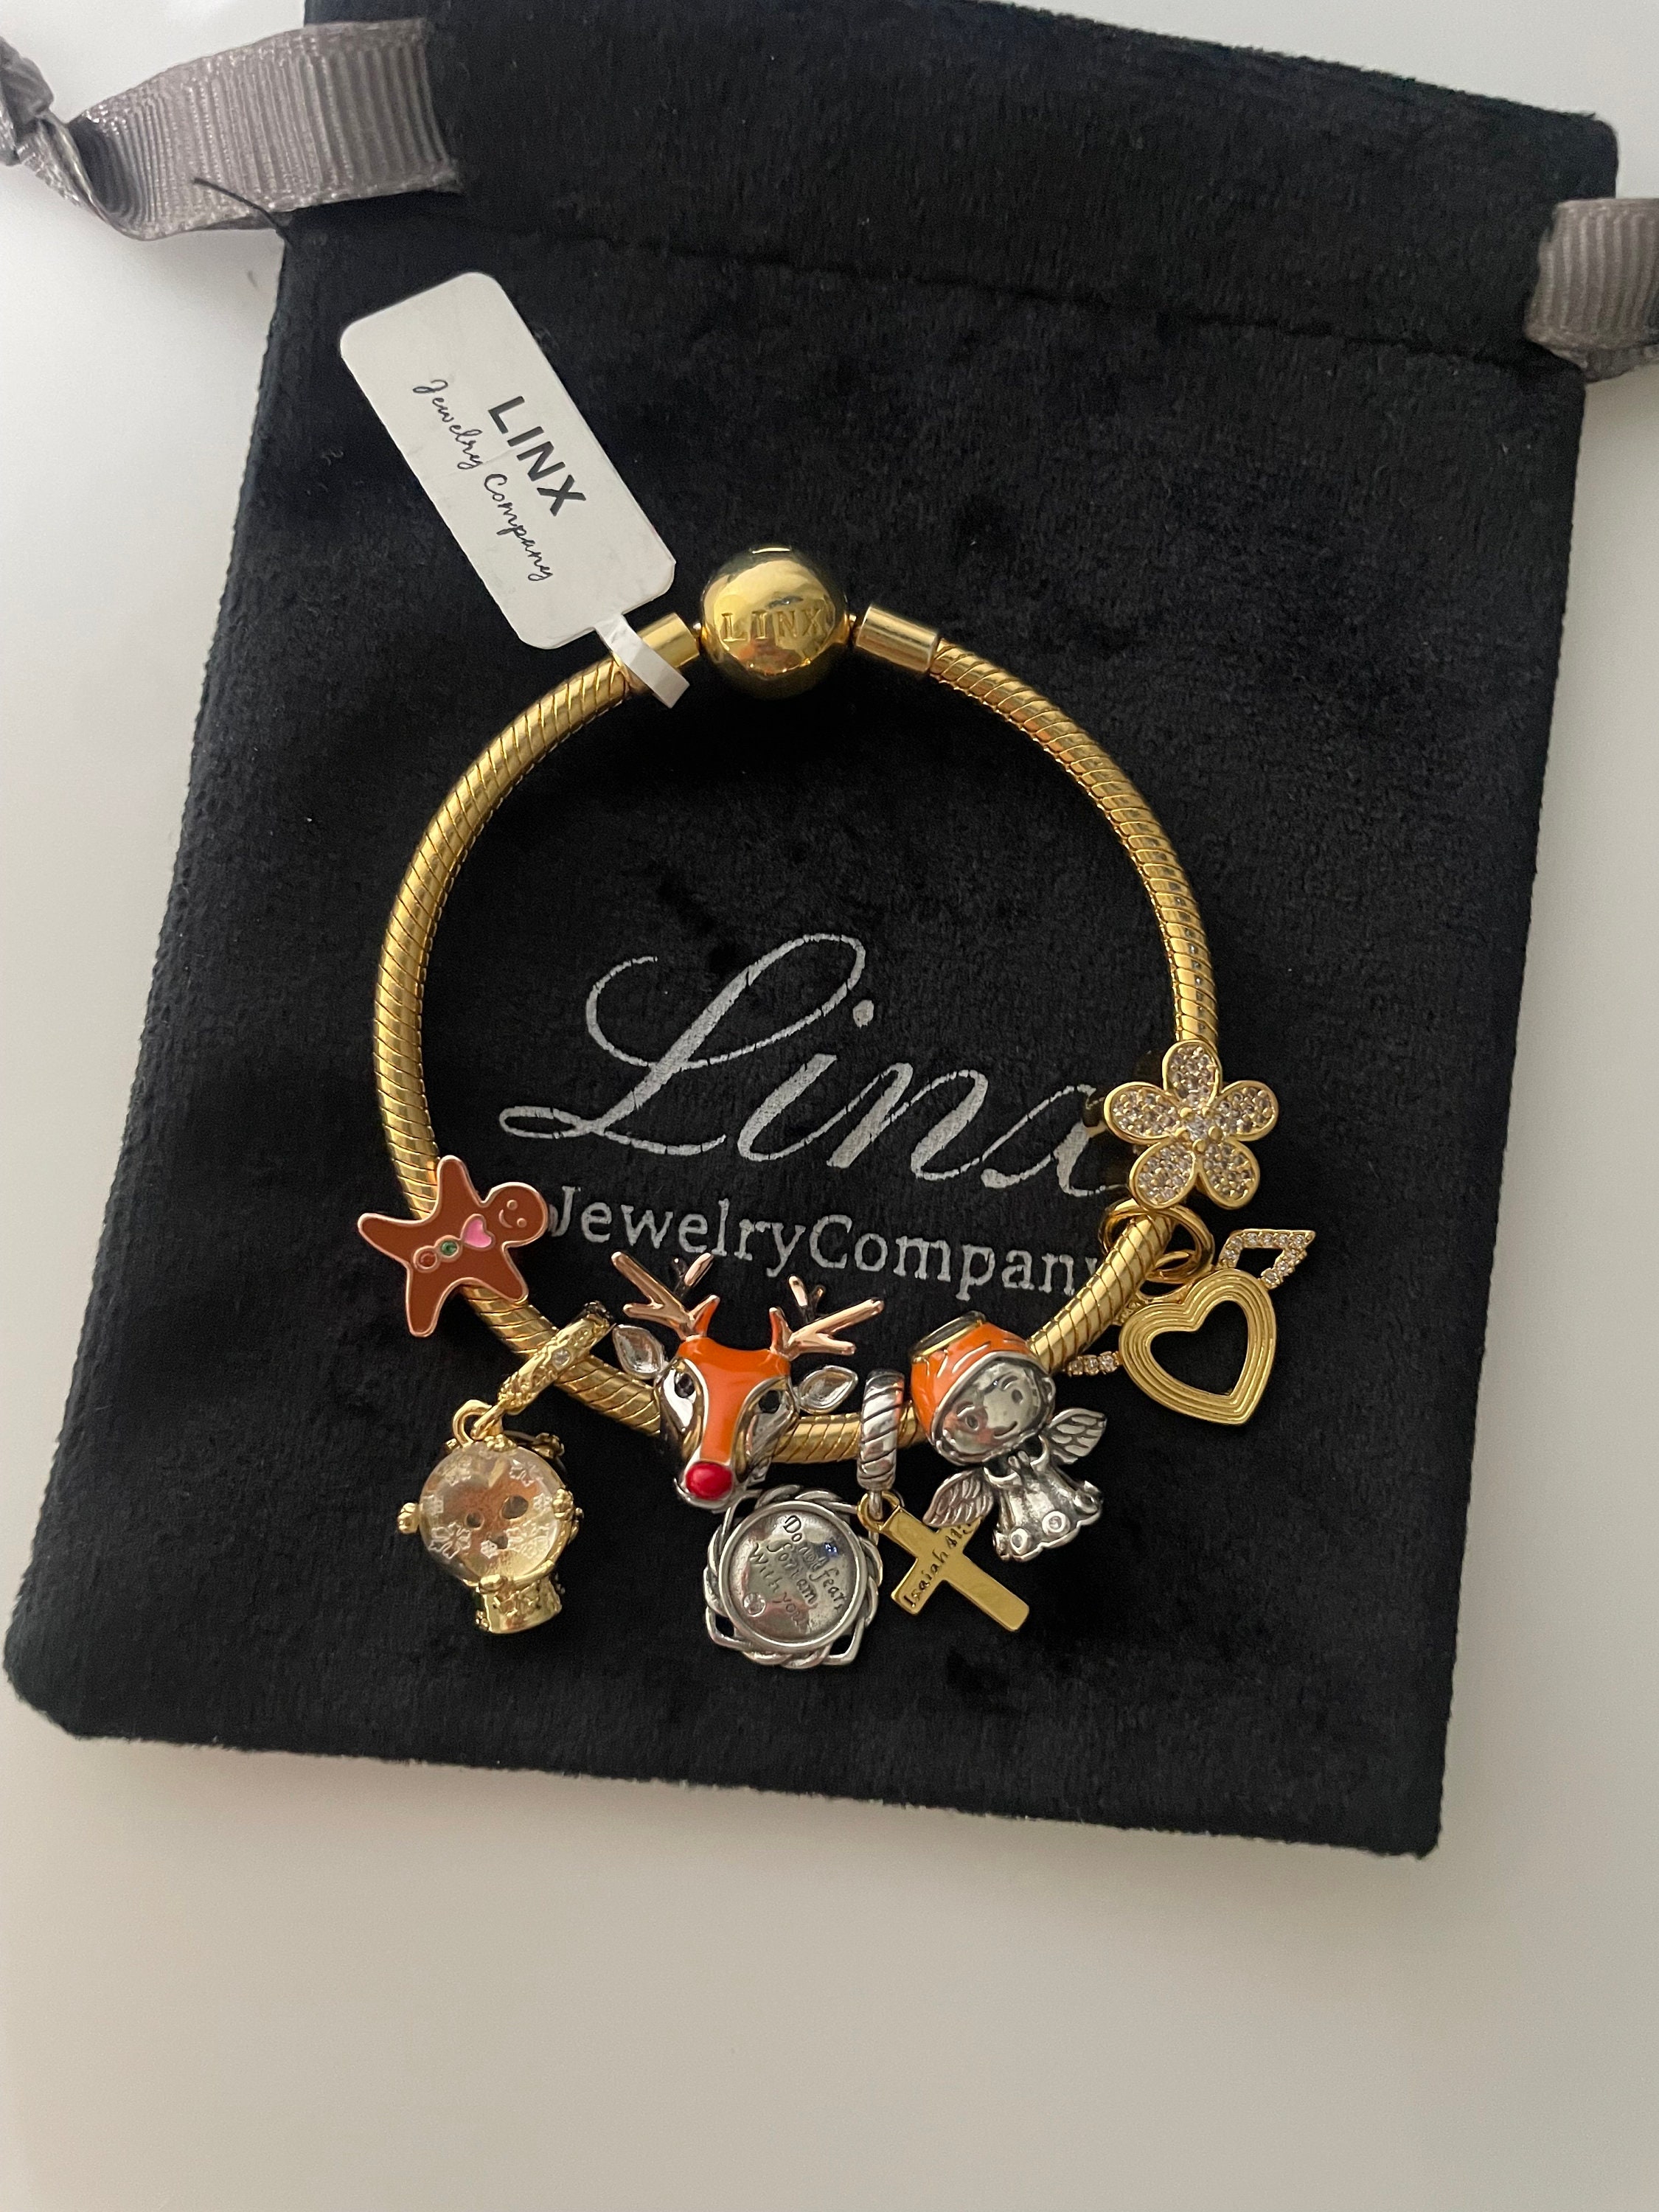 Linx, Jewelry